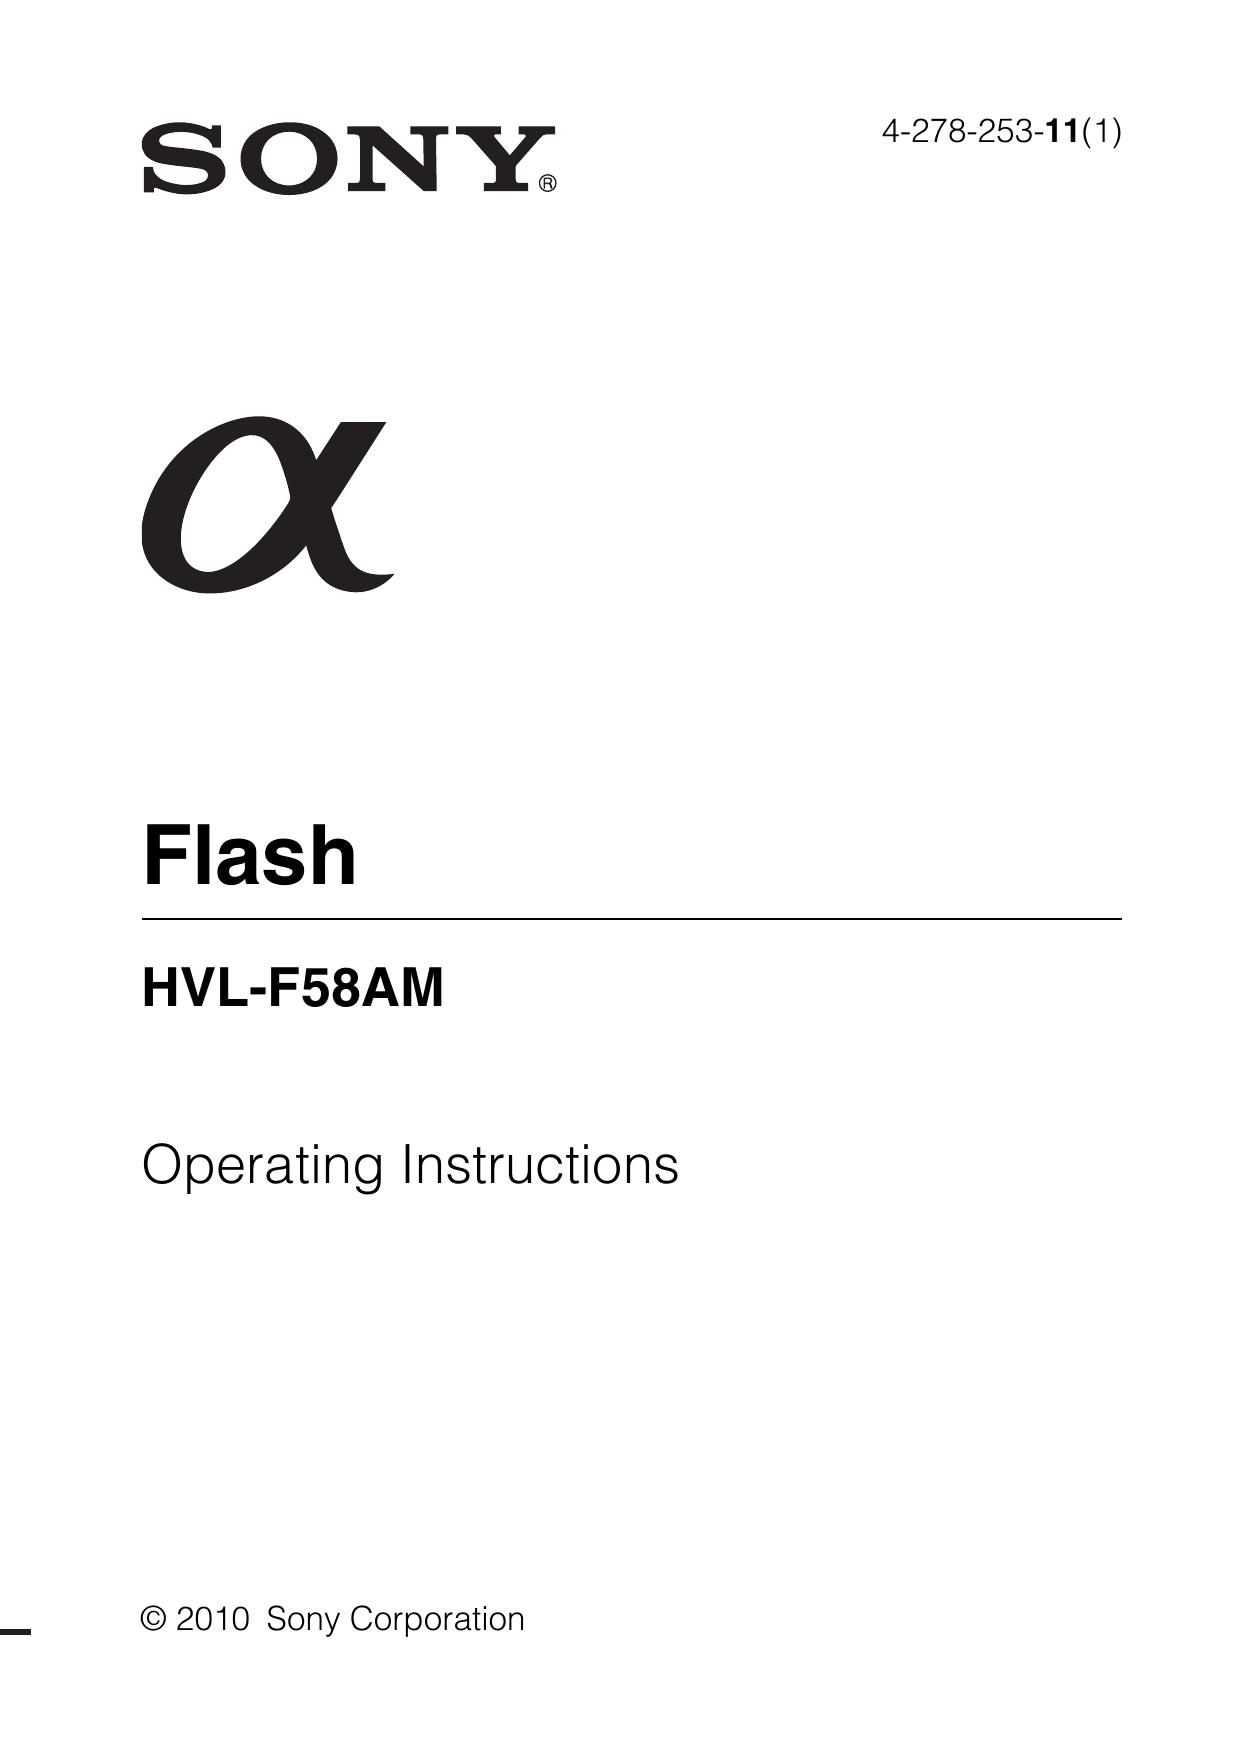 Sony HVL-F58AM Camera Flash User Manual